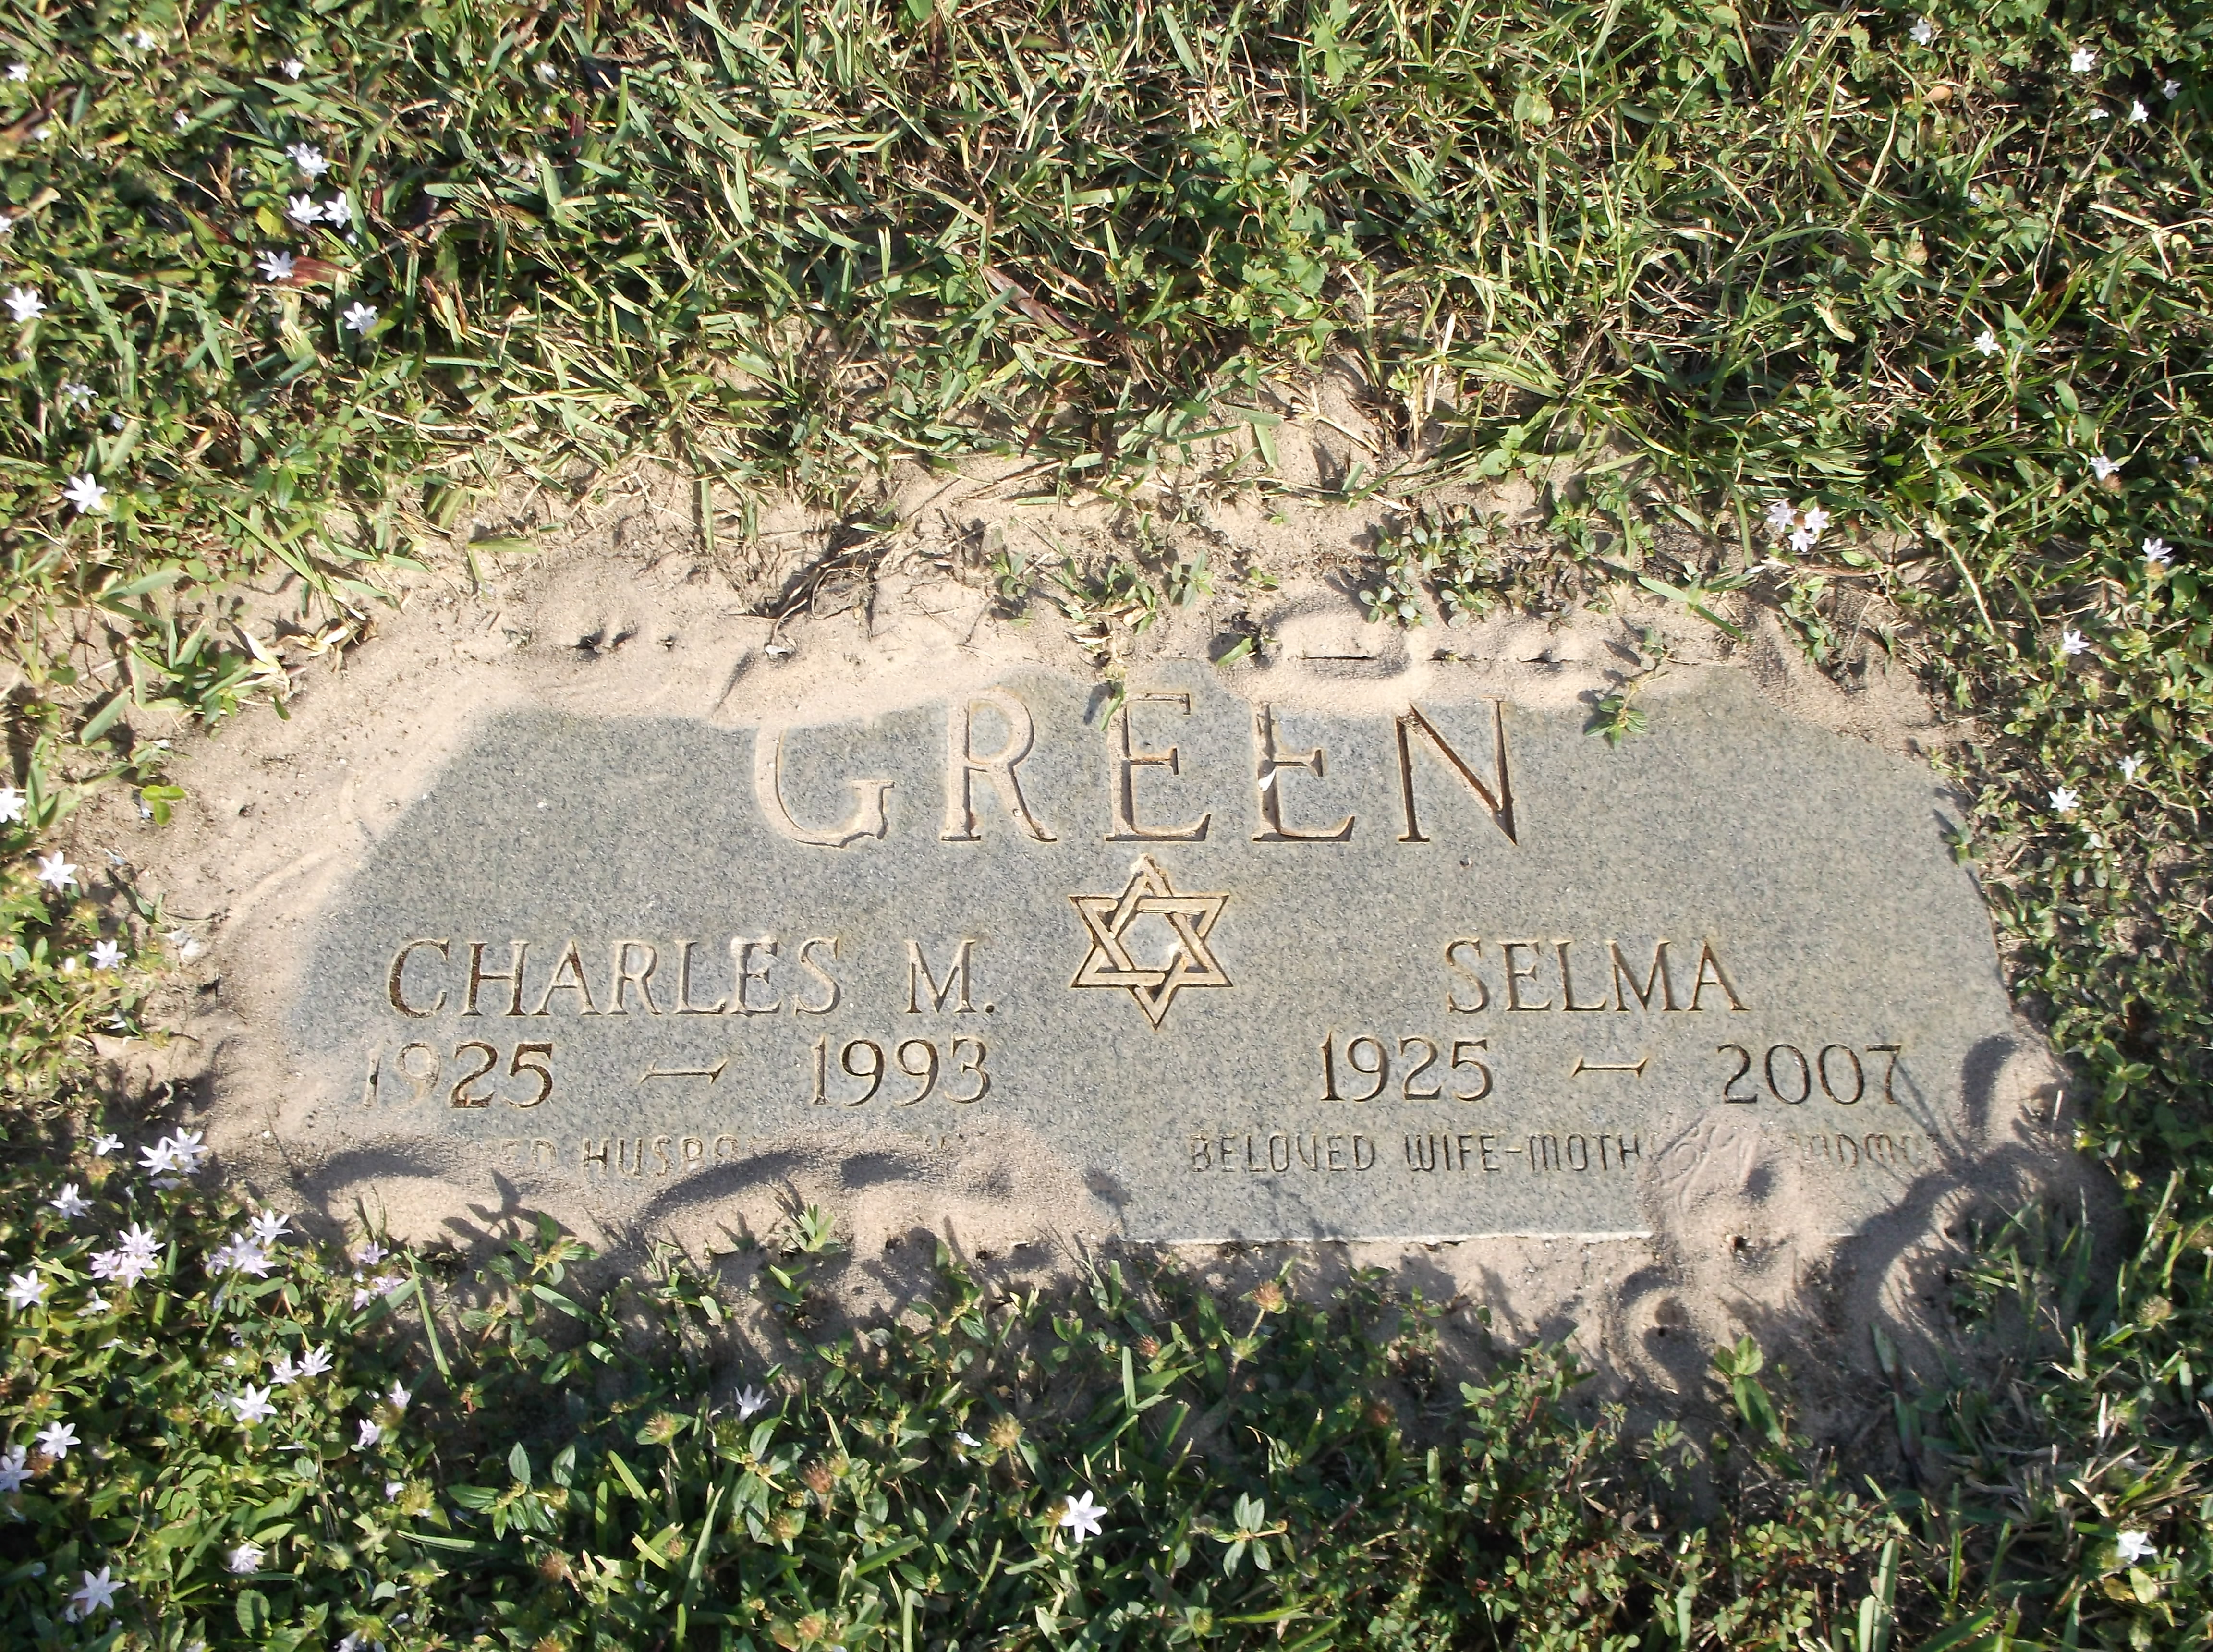 Charles M Green